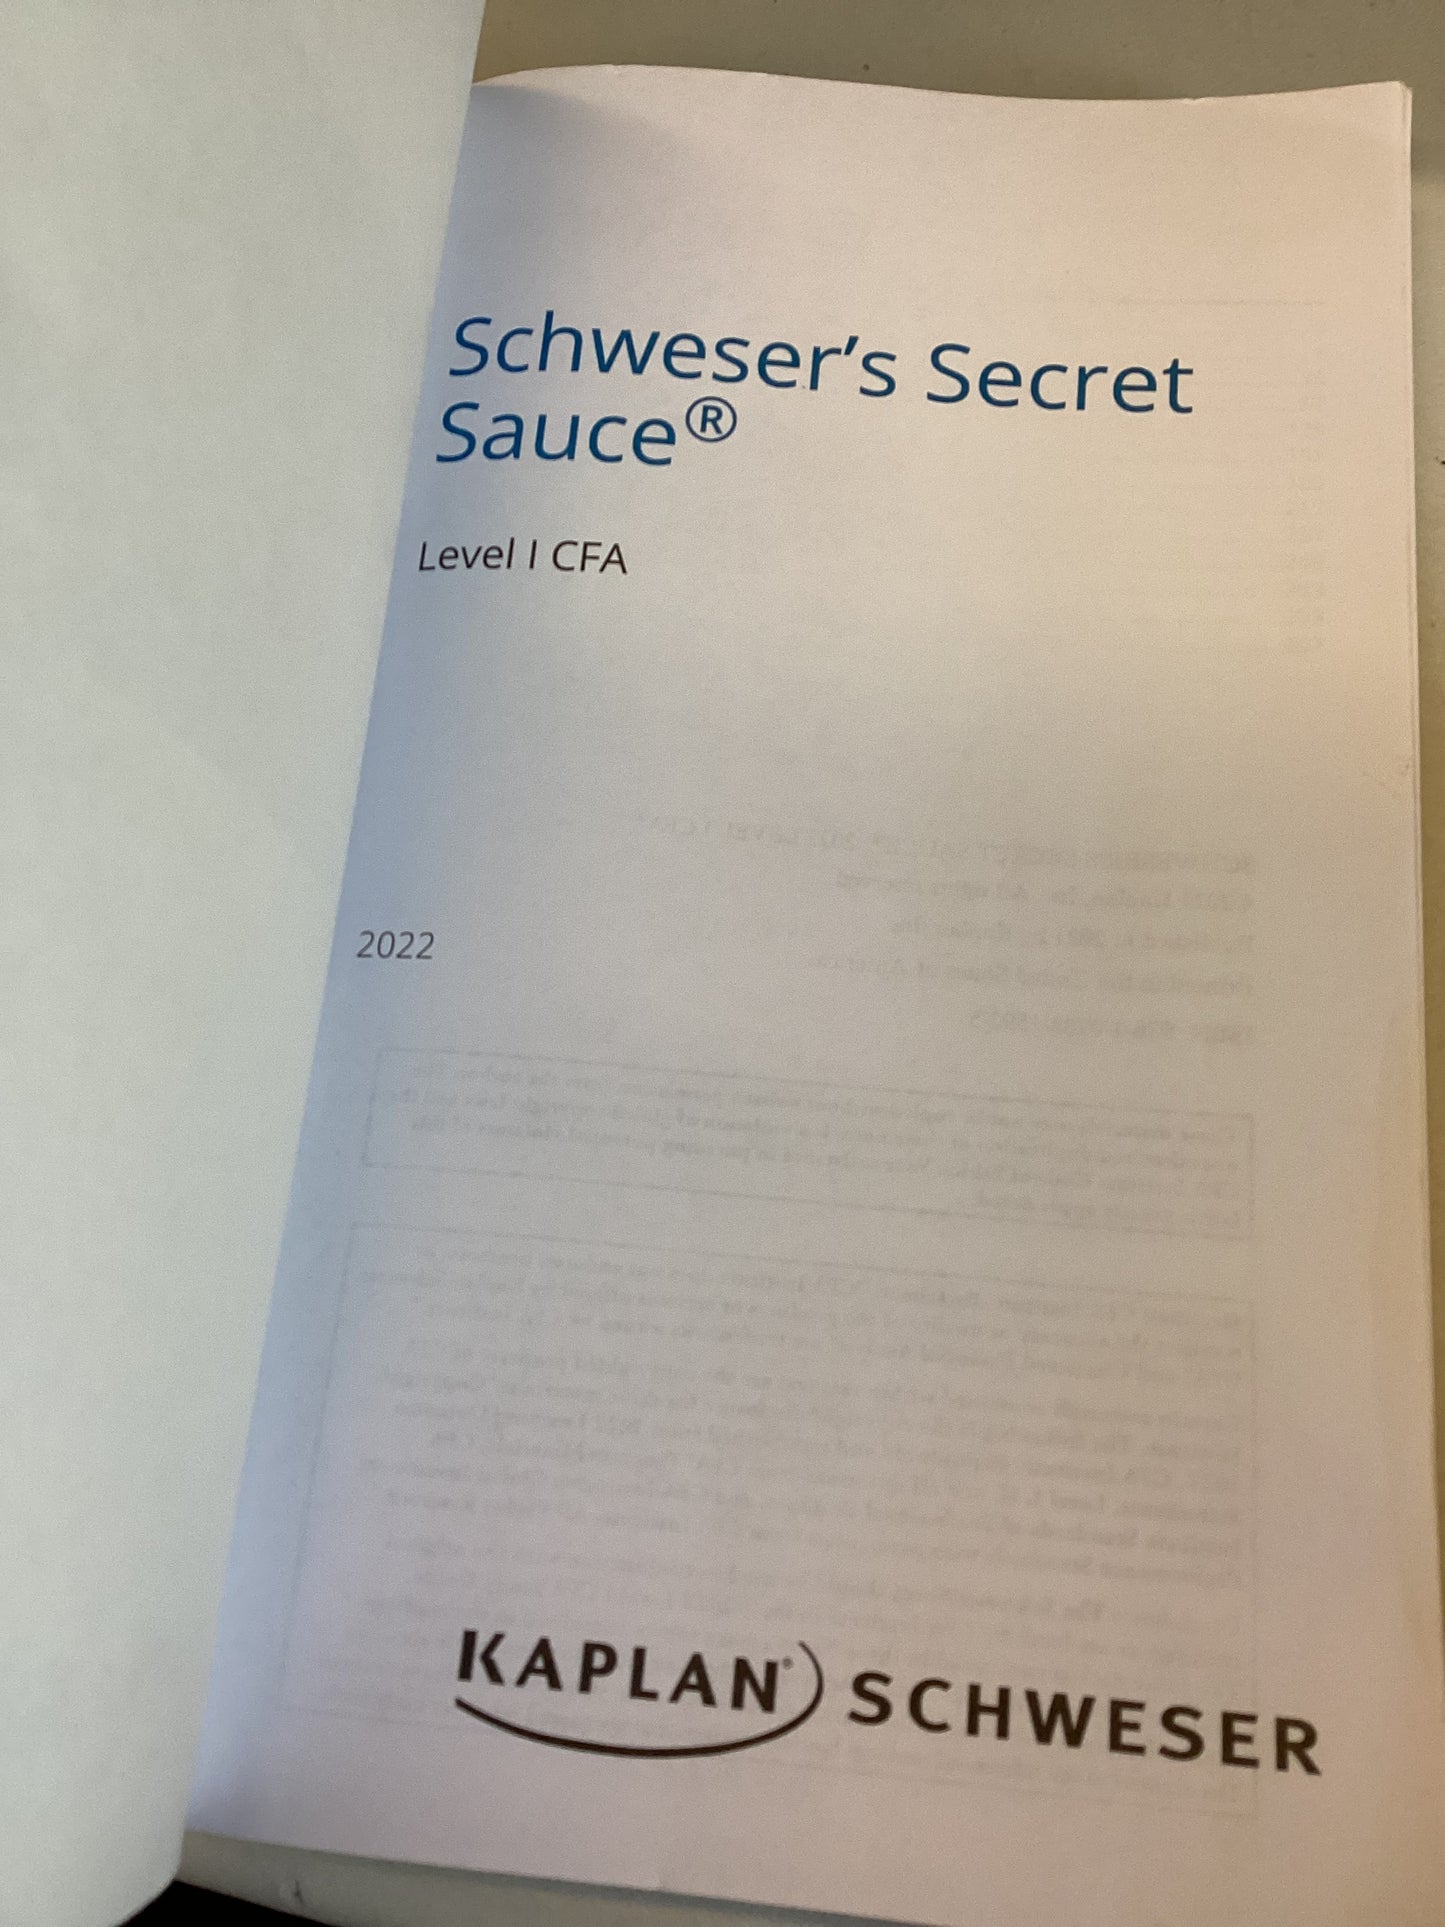 2022CFA Schweser's Secret Sauce Level 1 Exam Prep